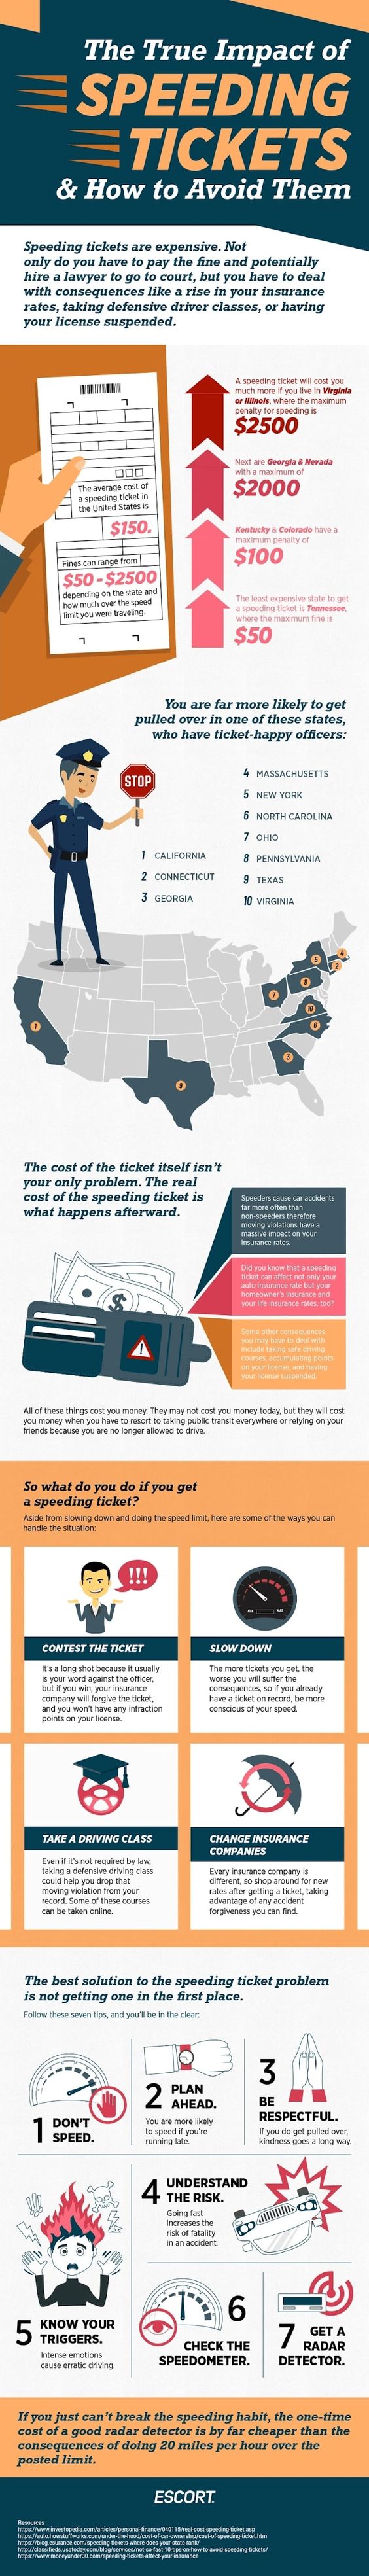 Avoiding Speeding Tickets Infographic Image